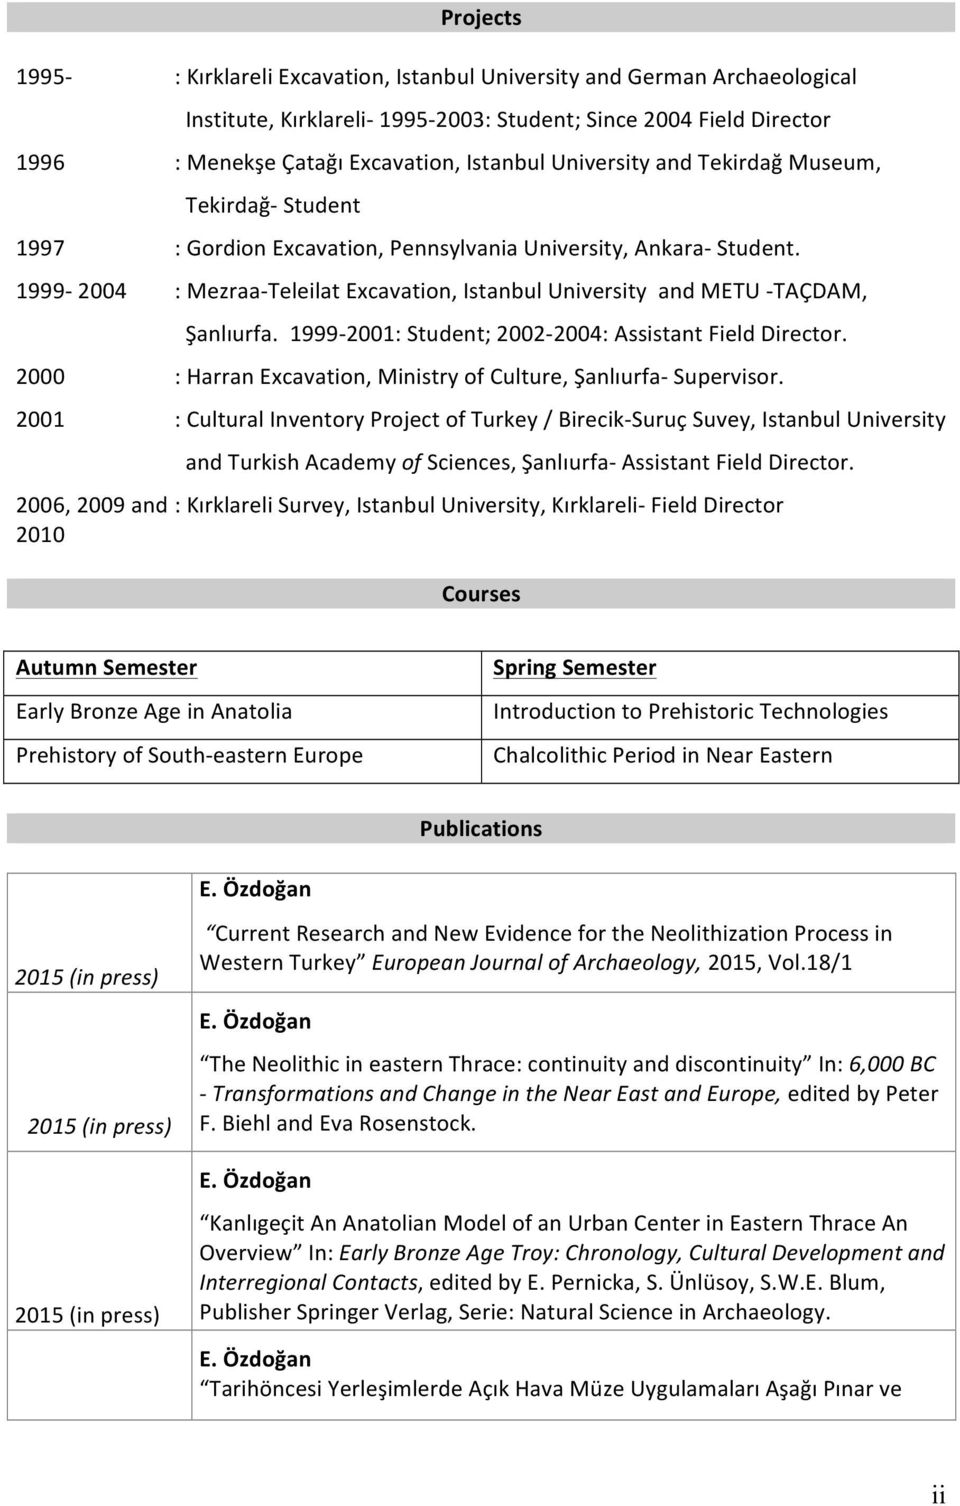 1999-2004 Projects : Mezraa- Teleilat Excavation, Istanbul University and METU - TAÇDAM, Şanlıurfa. 1999-2001: Student; 2002-2004: Assistant Field Director.